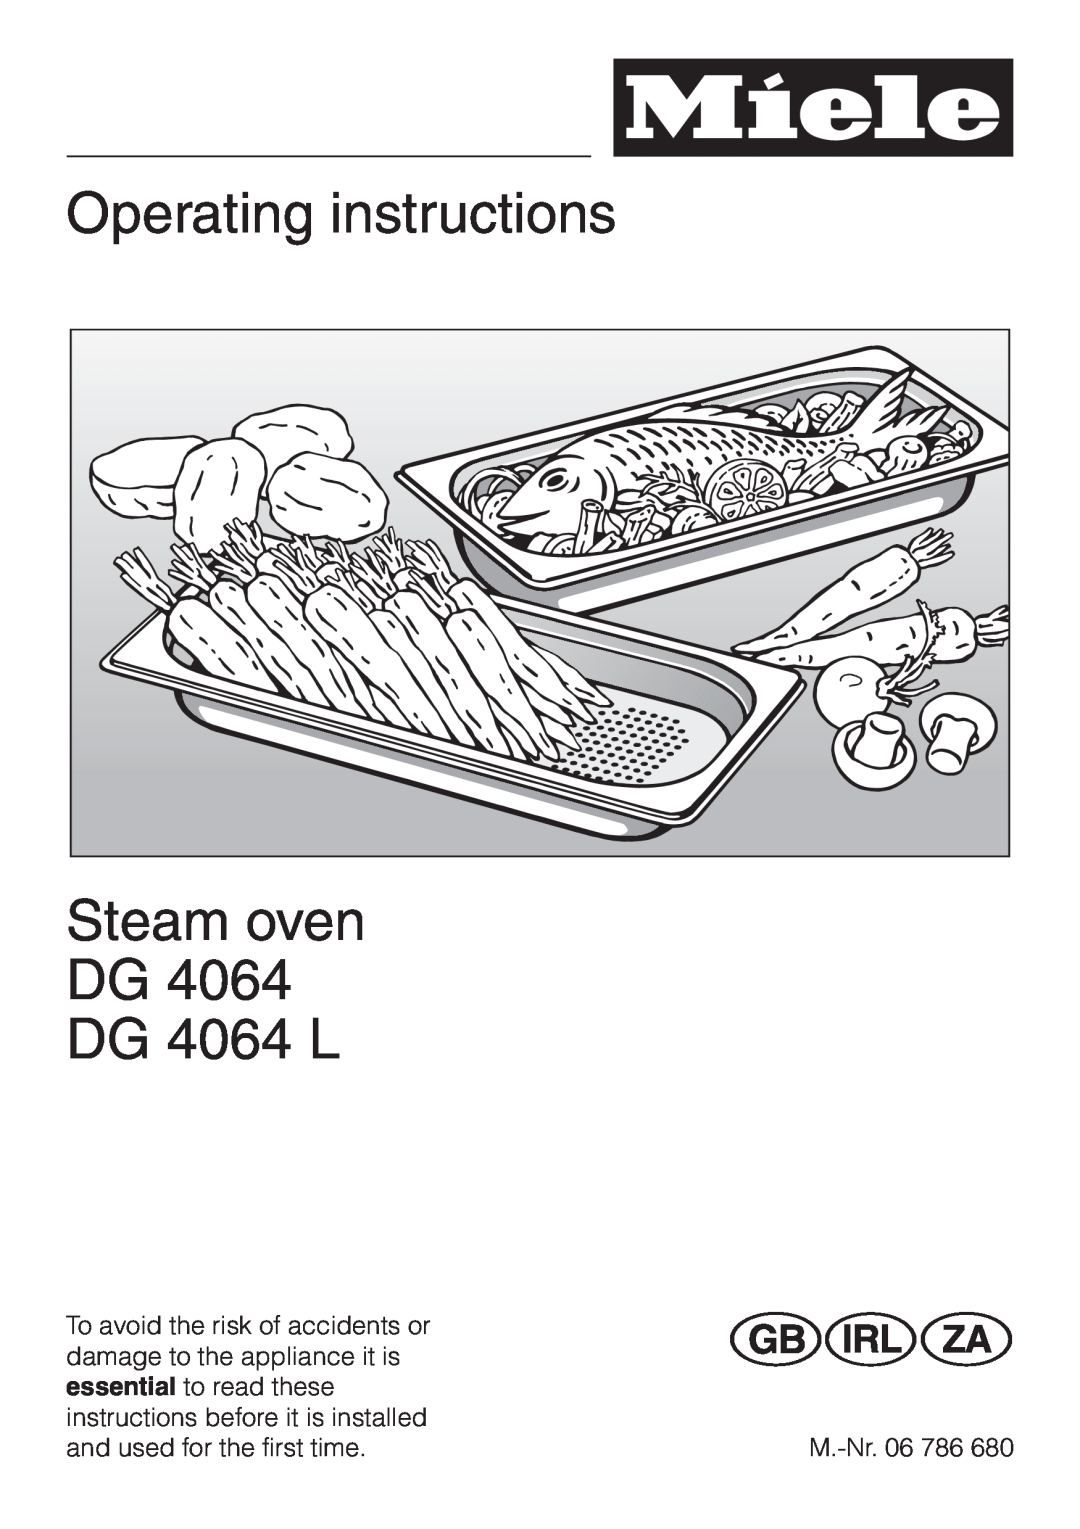 Miele operating instructions Operating instructions Steam oven DG 4064 / DG, DG 4064 L / DG 4164 L, en - GB 